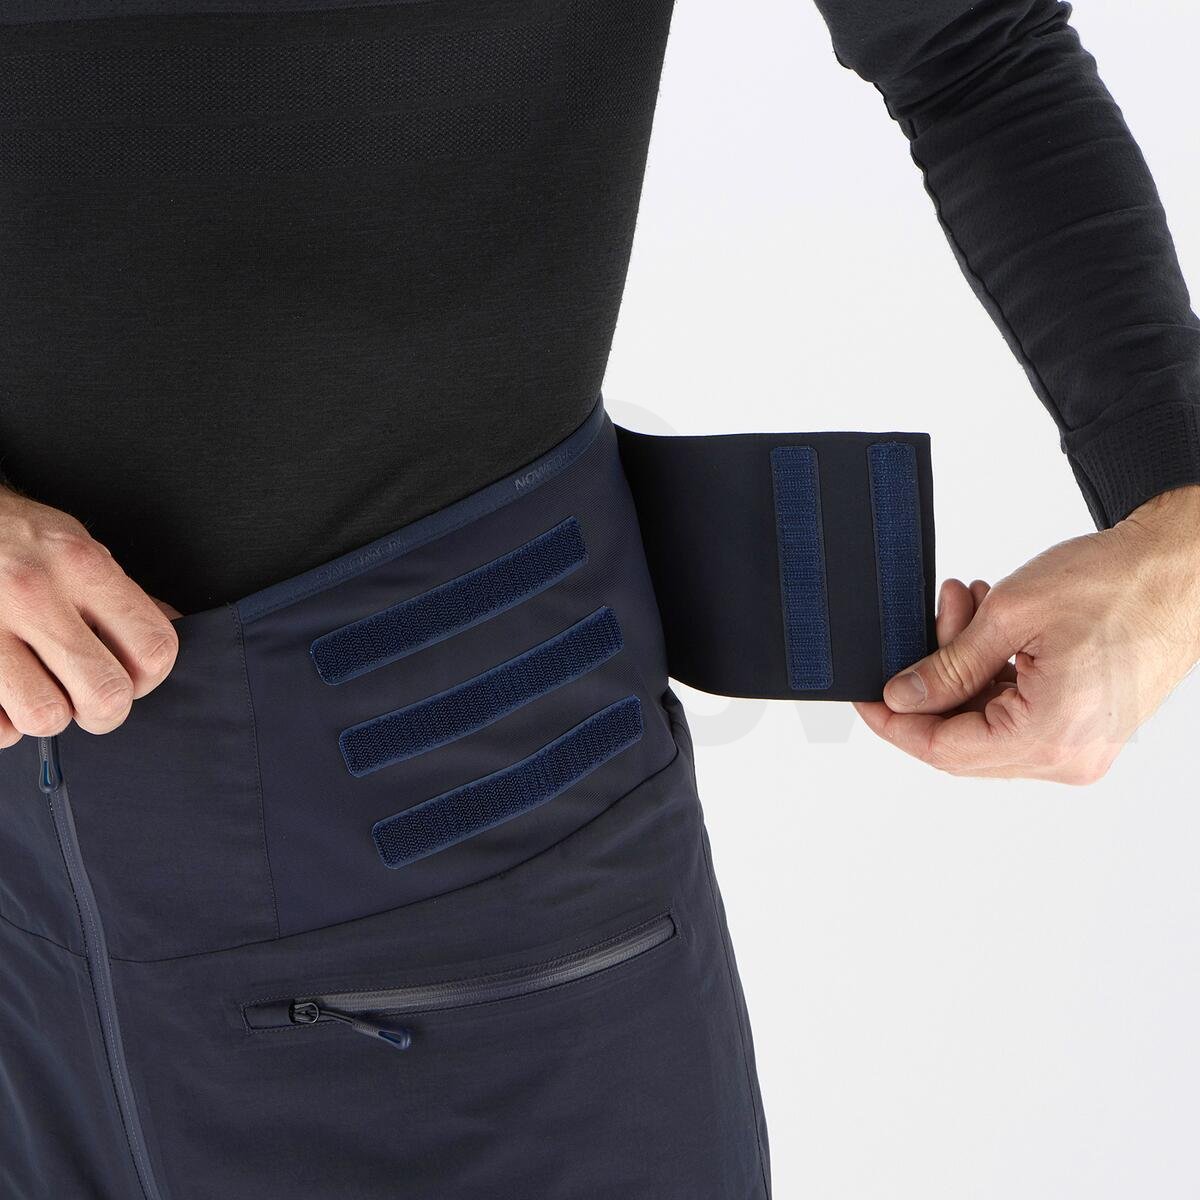 Kalhoty Salomon Gravity Insul GTX® Pant M - modrá